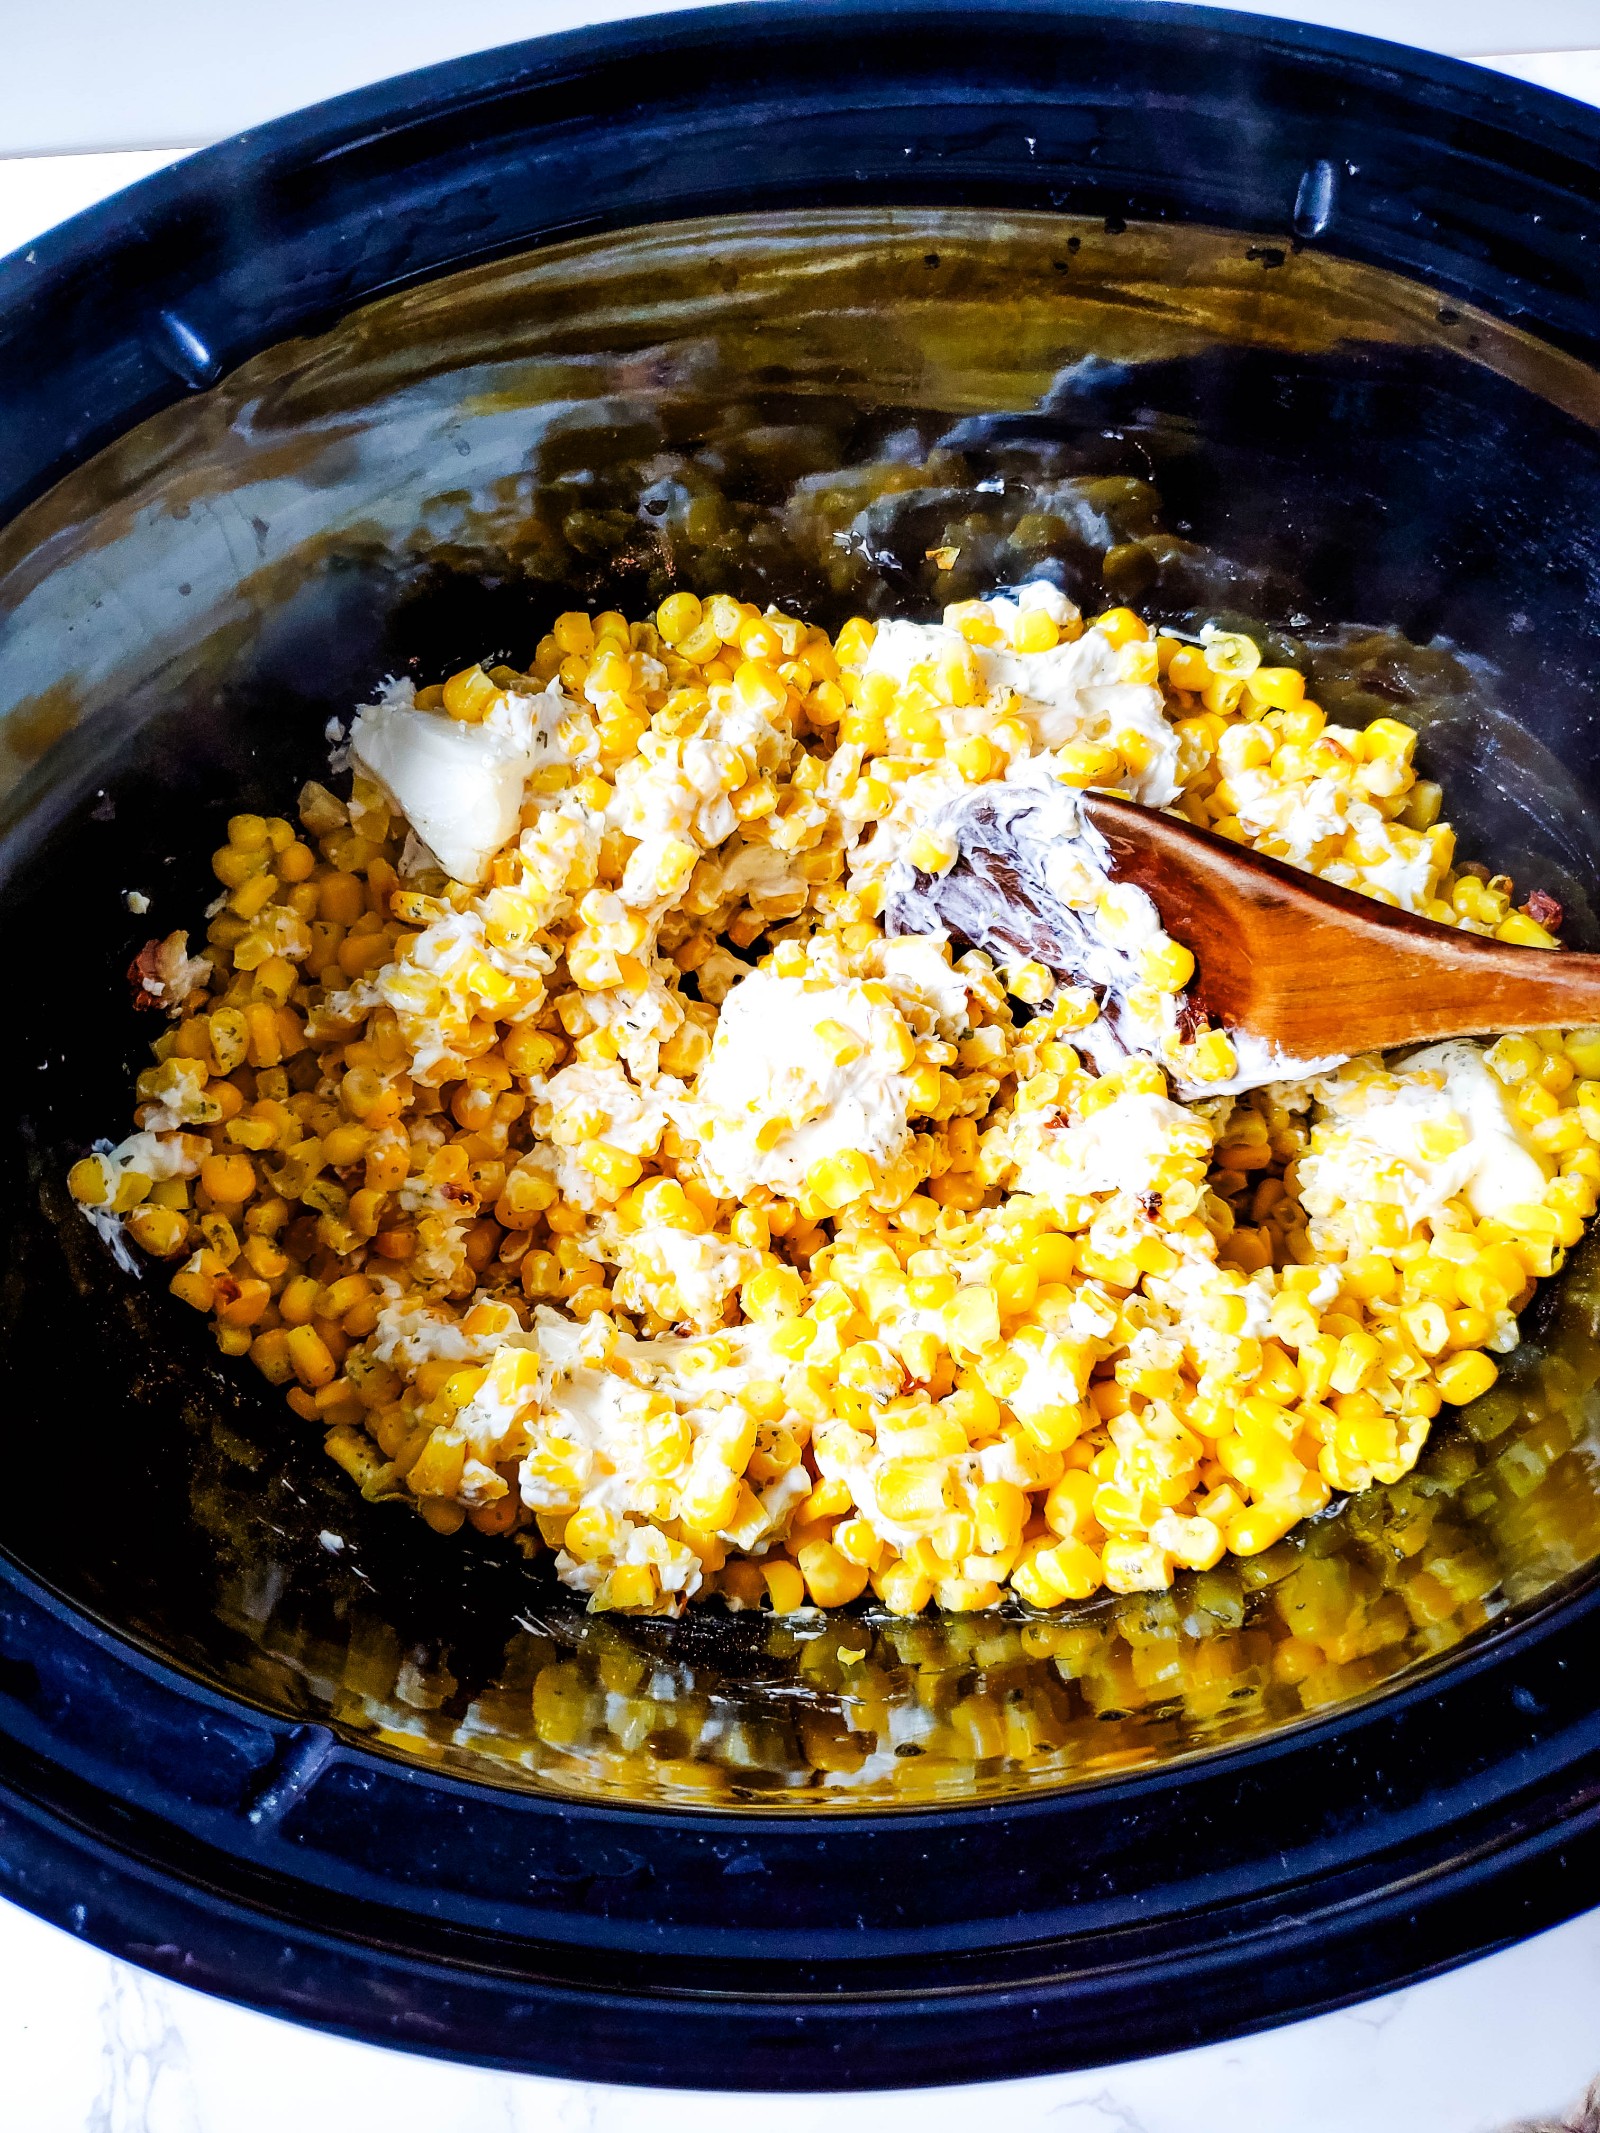 A wooden spoon stirring the cream cheese corn casserole.